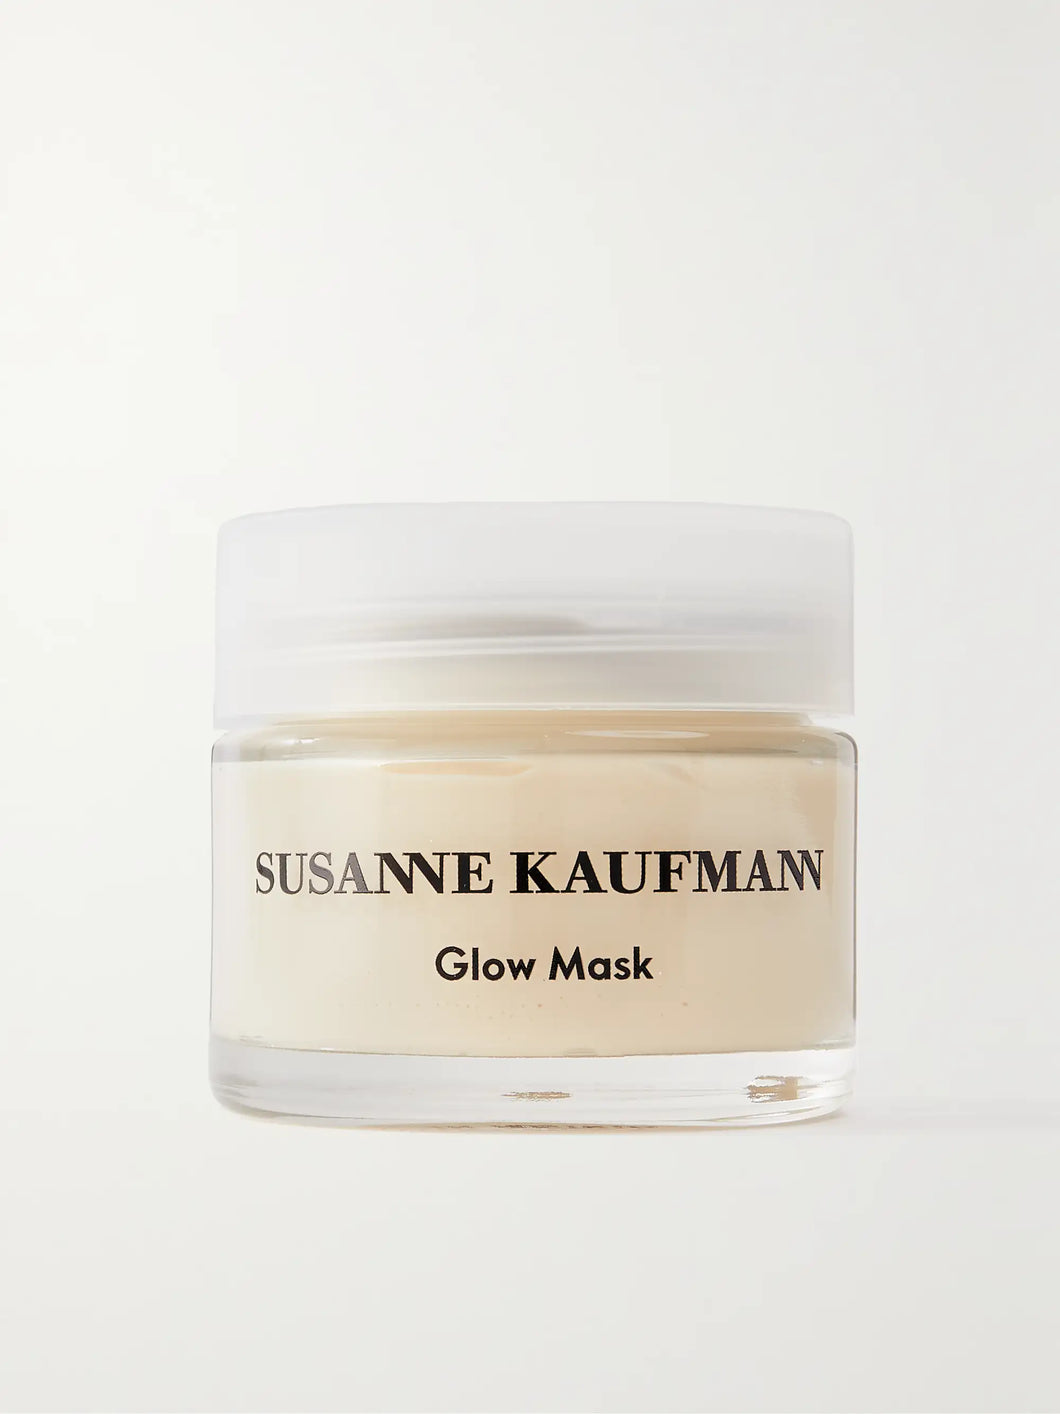 Susanne Kaufmann - Glow Mask